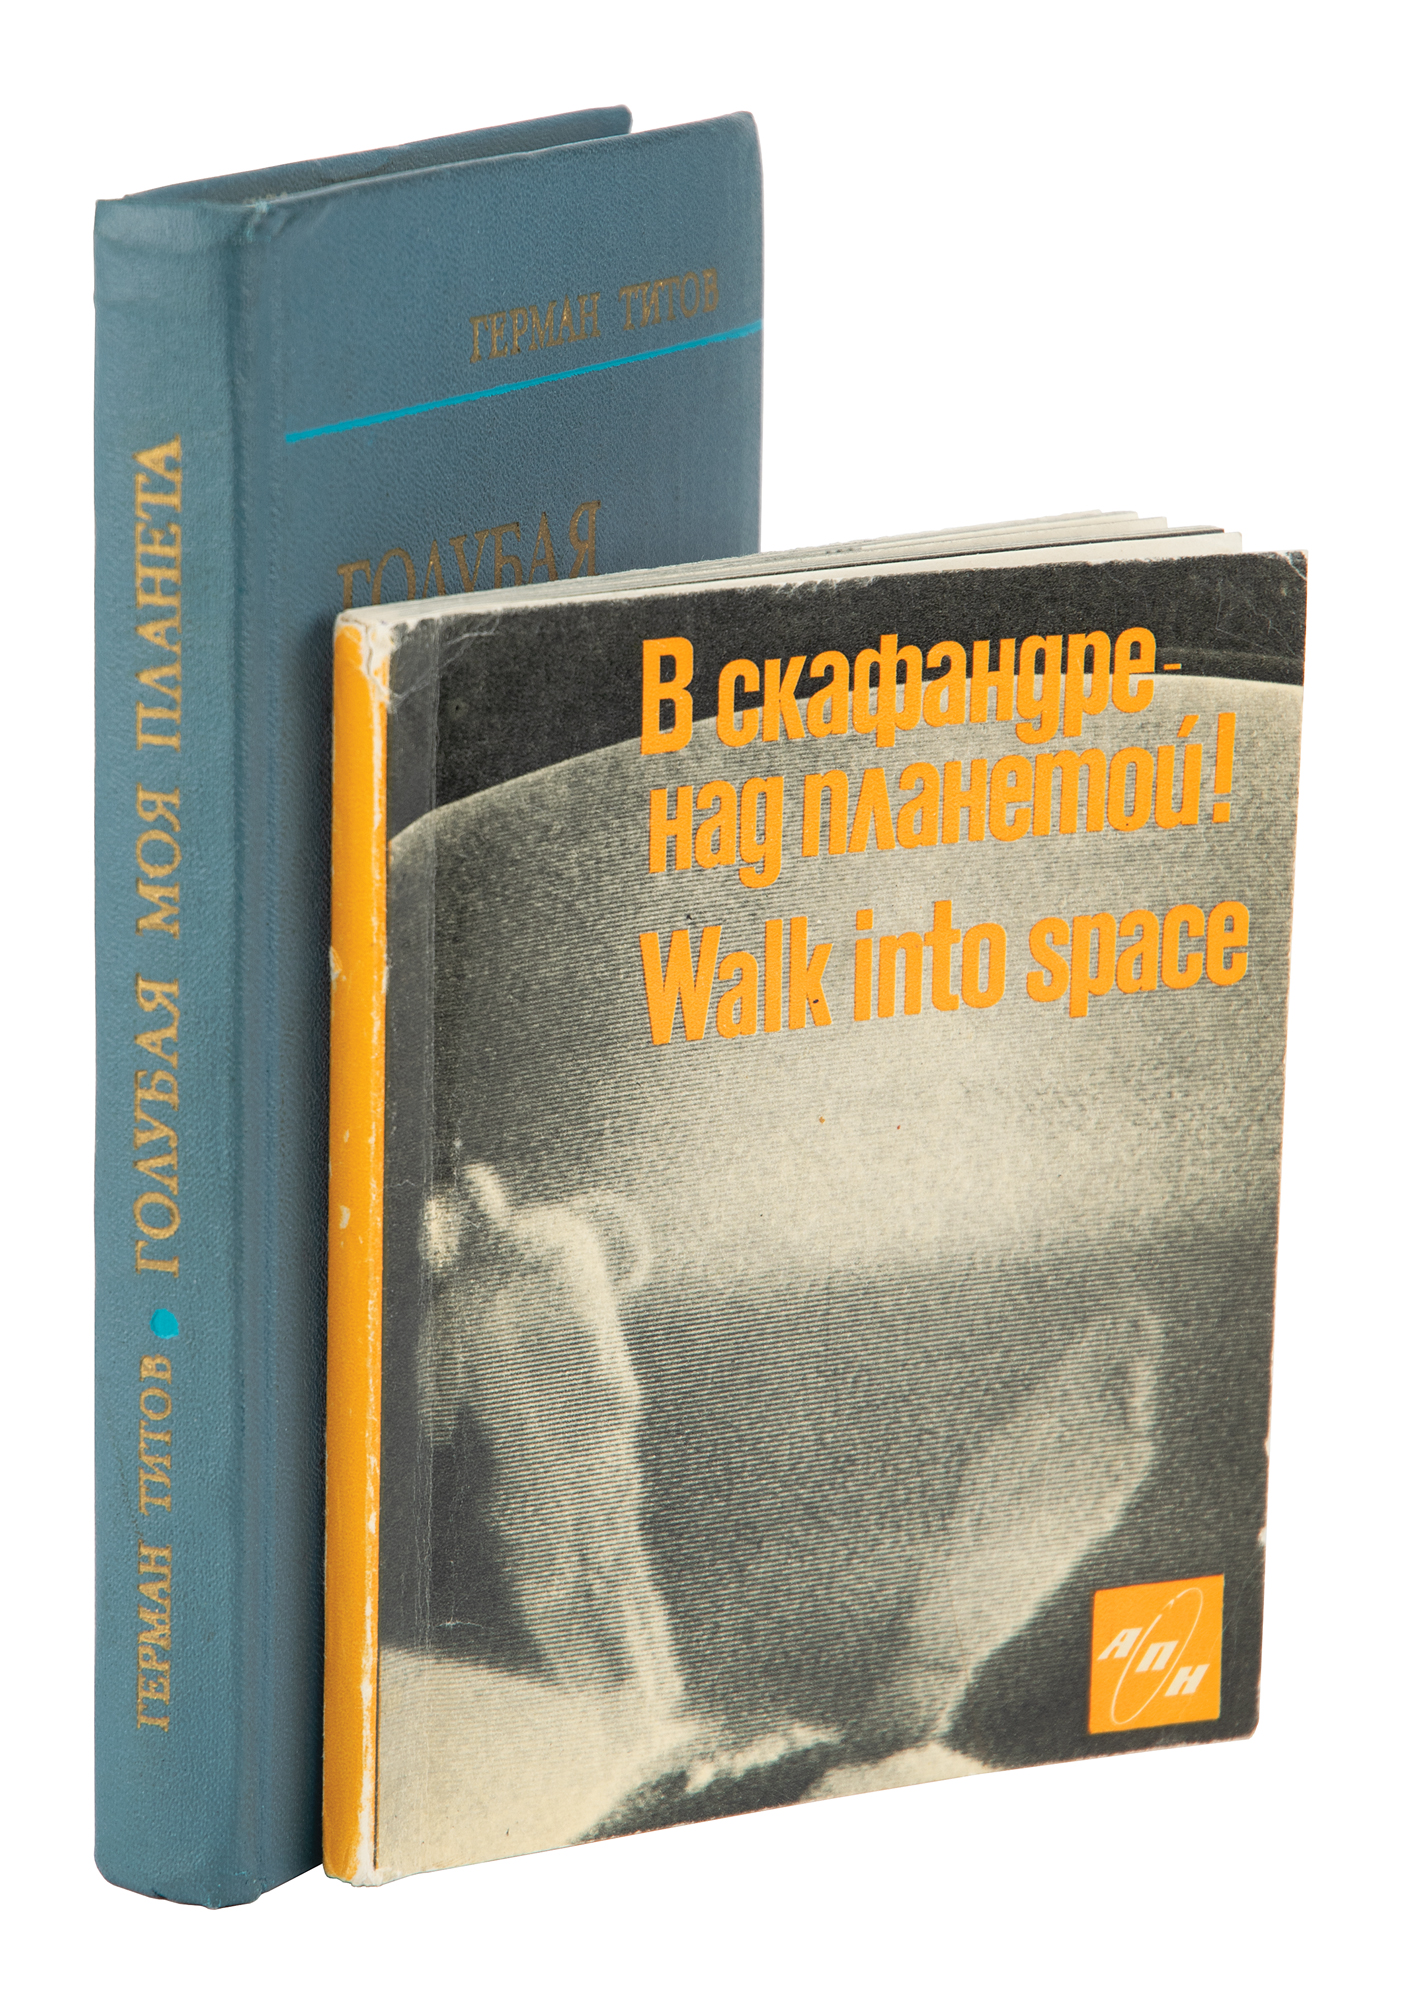 Lot #393 Cosmonauts (2) Books Signed by Leonov, Belyayev, and Titov